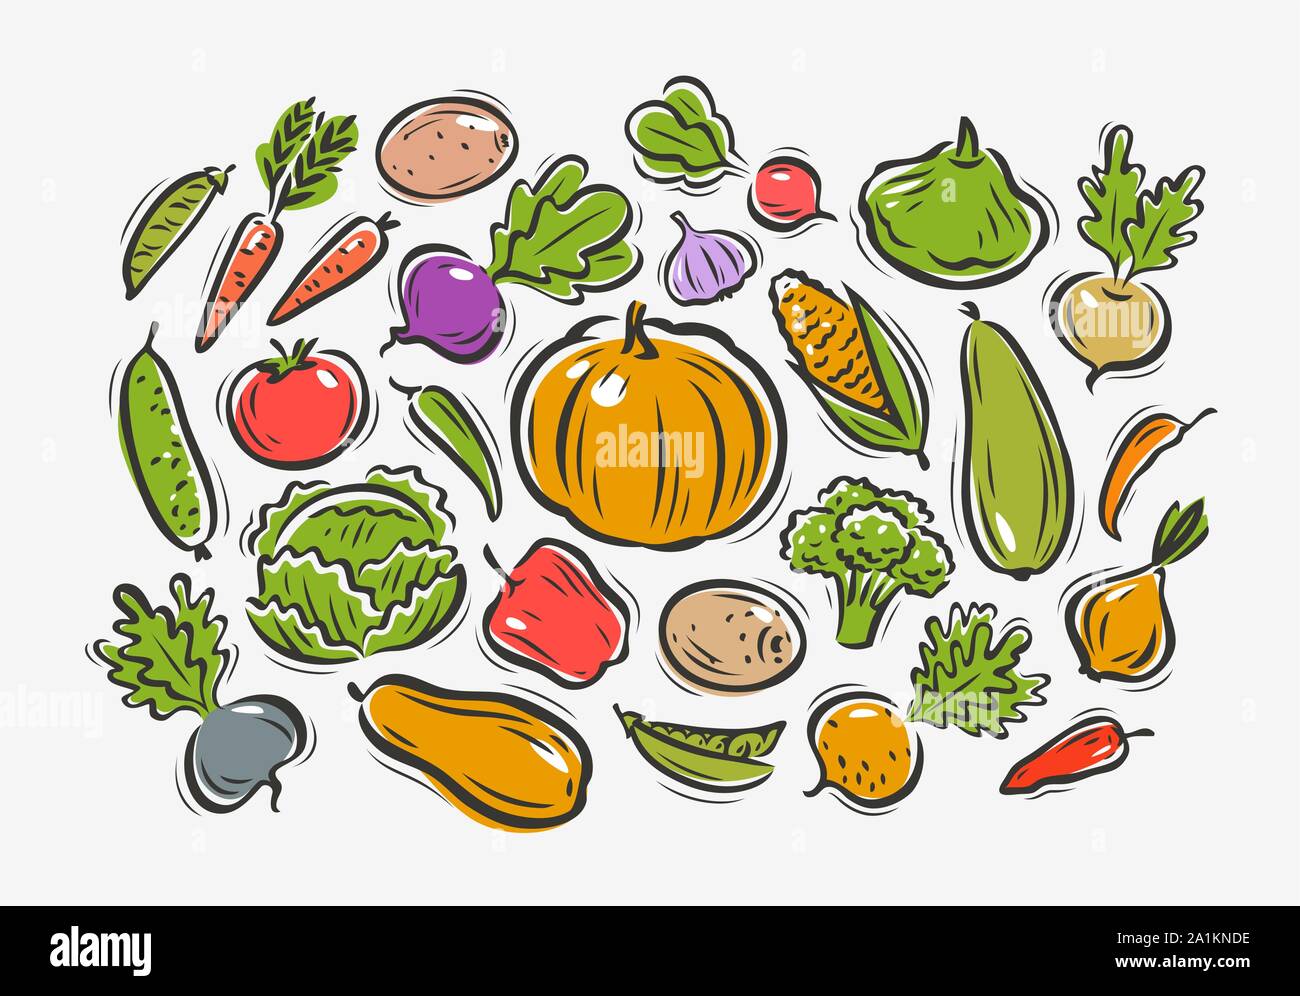 Vegetables set. Farming, horticulture concept. Vector illustration Stock Vector